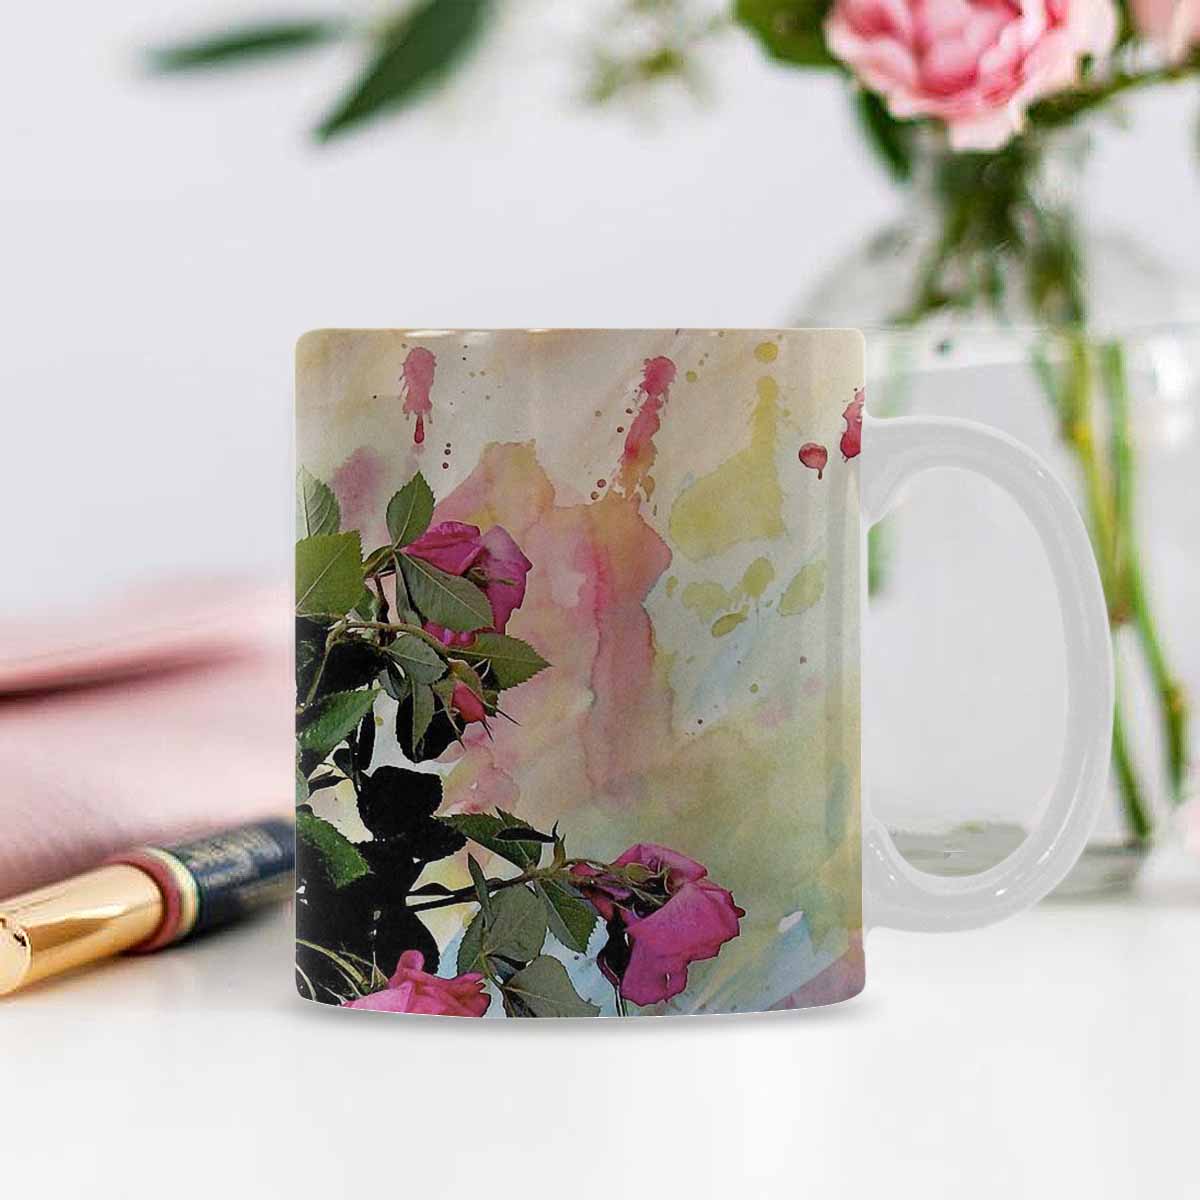 Vintage floral coffee mug or tea cup, Design 22